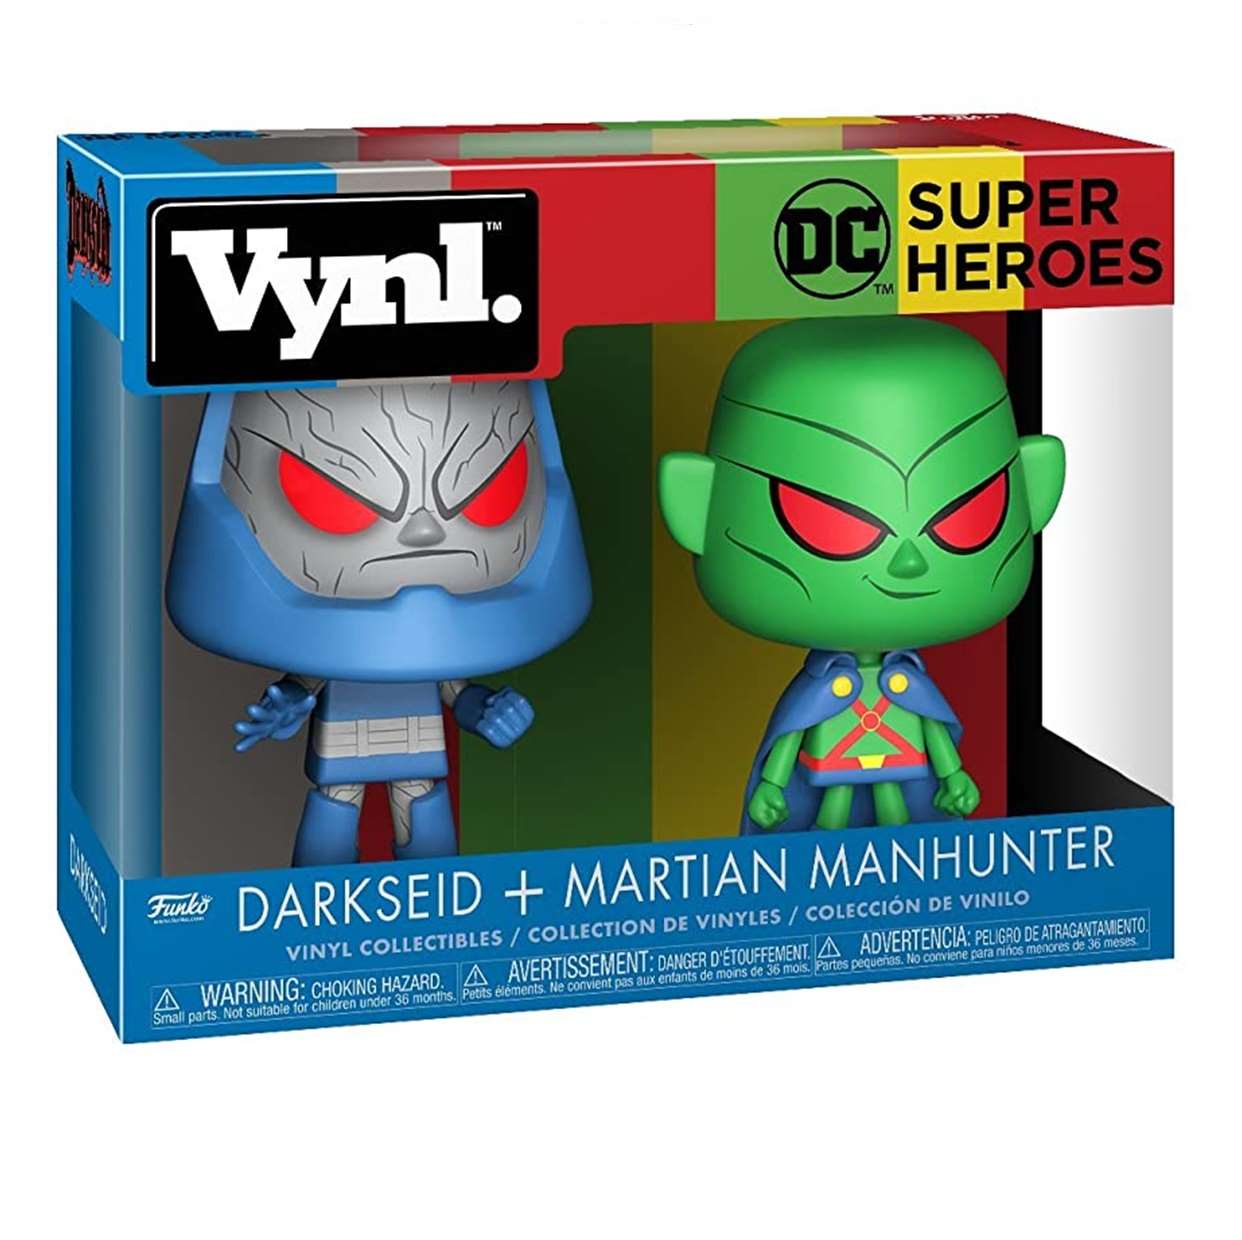 Darksaid + Martian Manhunter Dc Super Heroes Funko Vynl